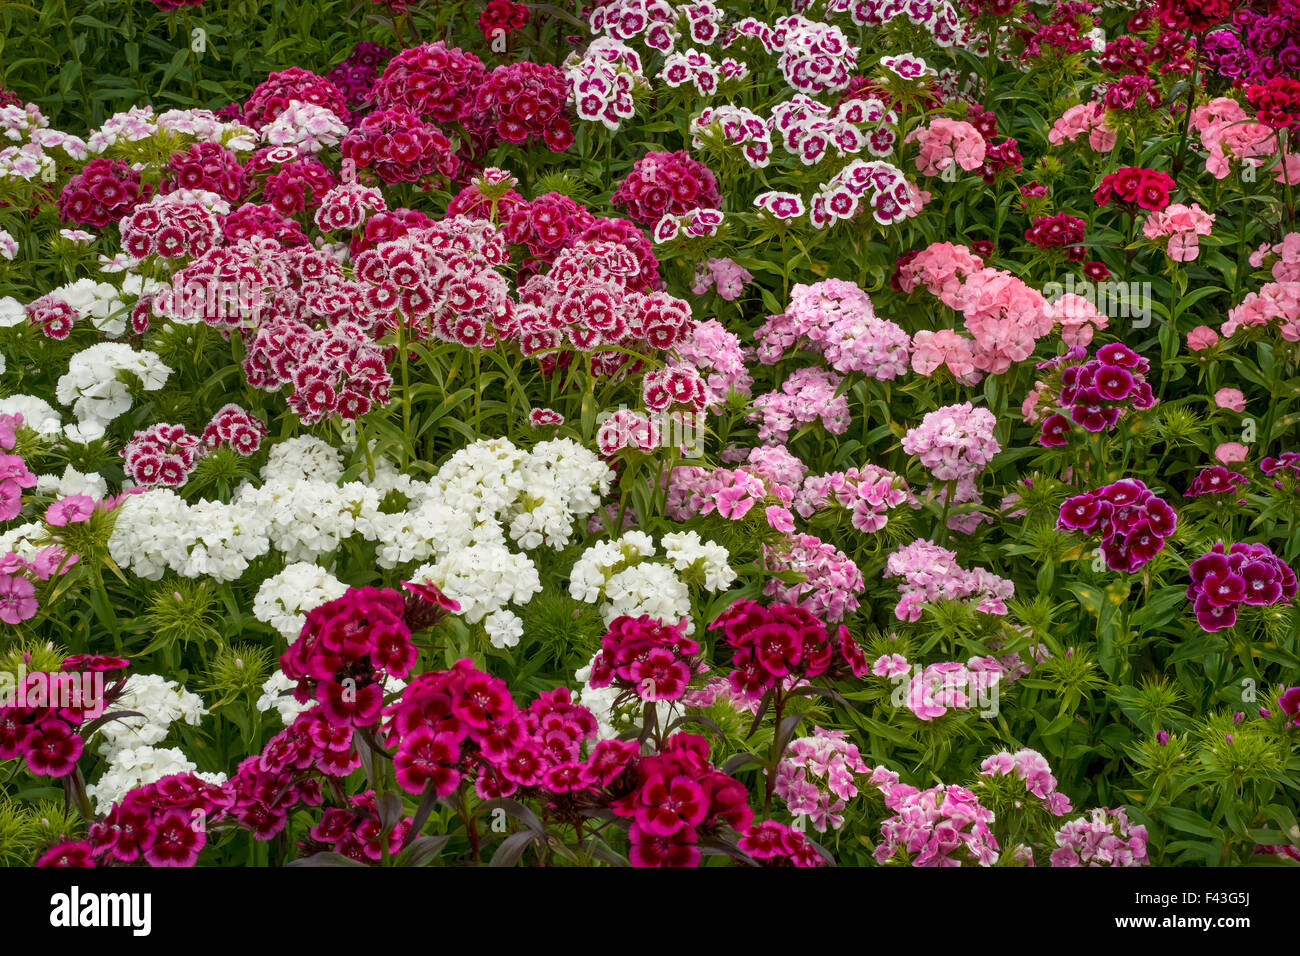 Sweet william dianthus flowering plants, perennials in the garden Stock Photo